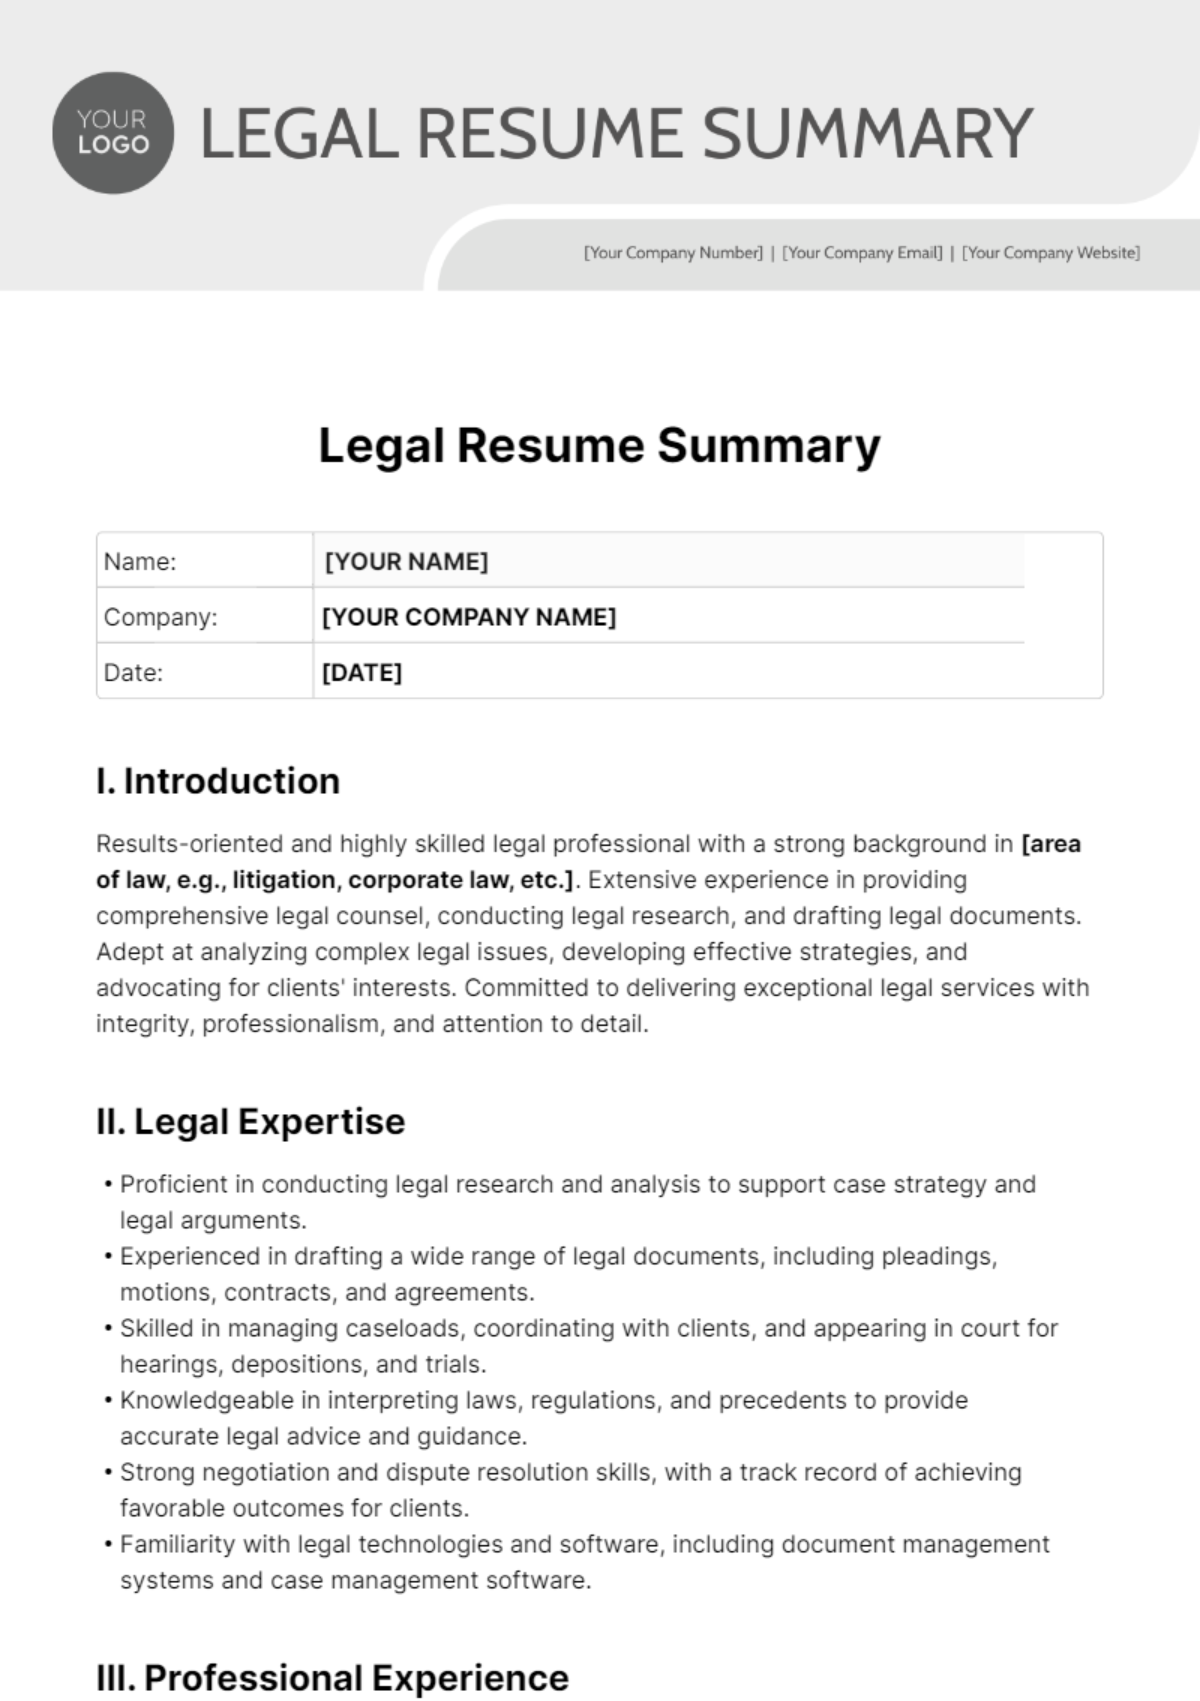 Legal Resume Summary Template 